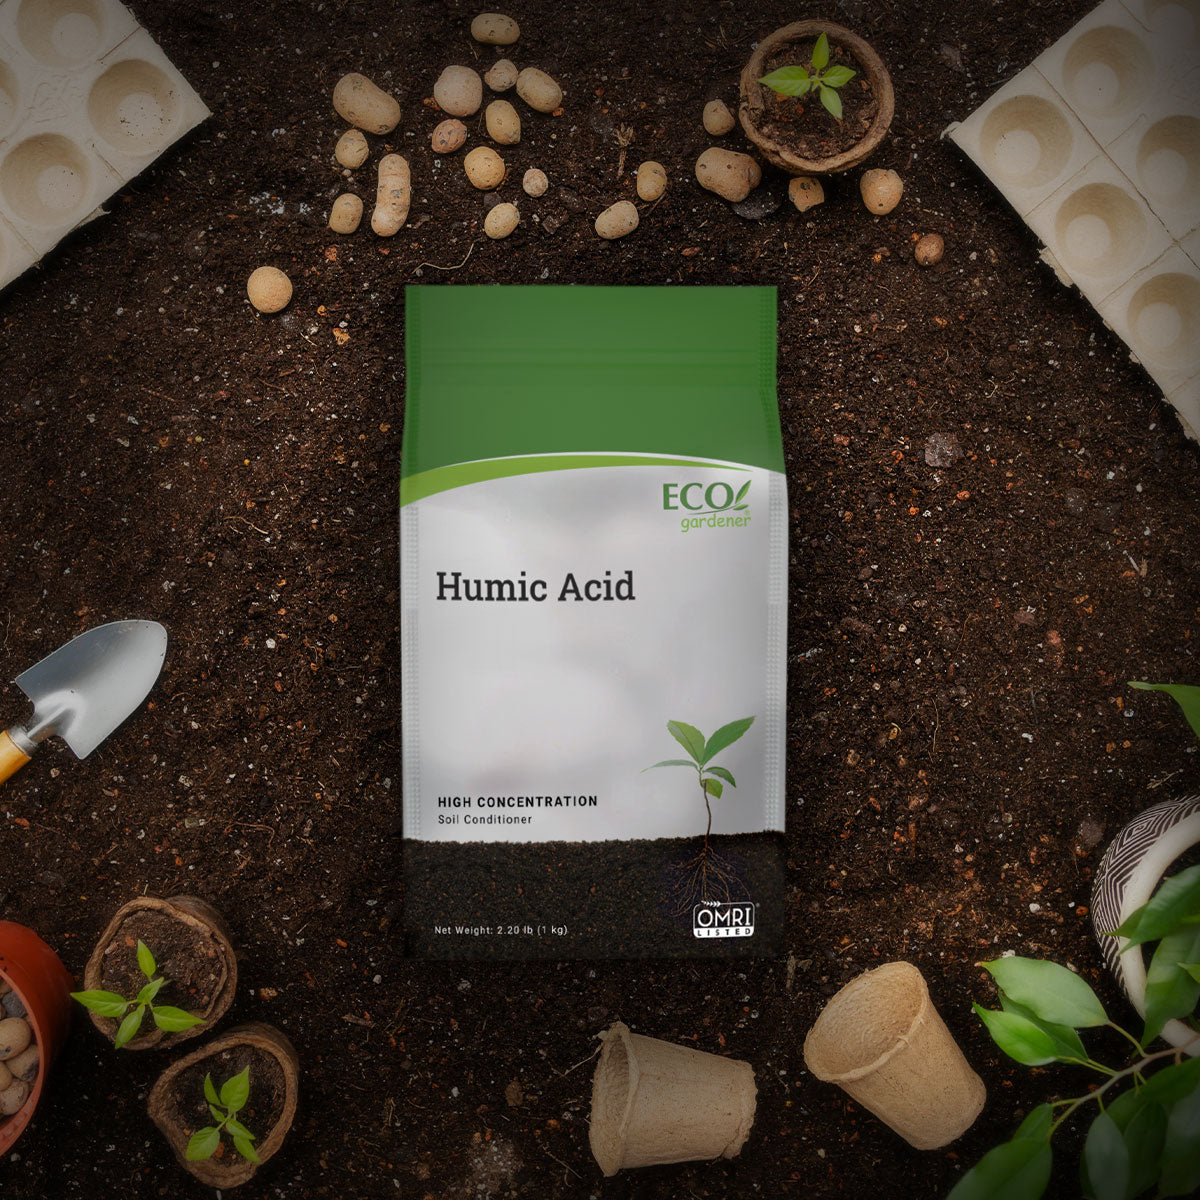 EcoGardener Humic Acid in the garden